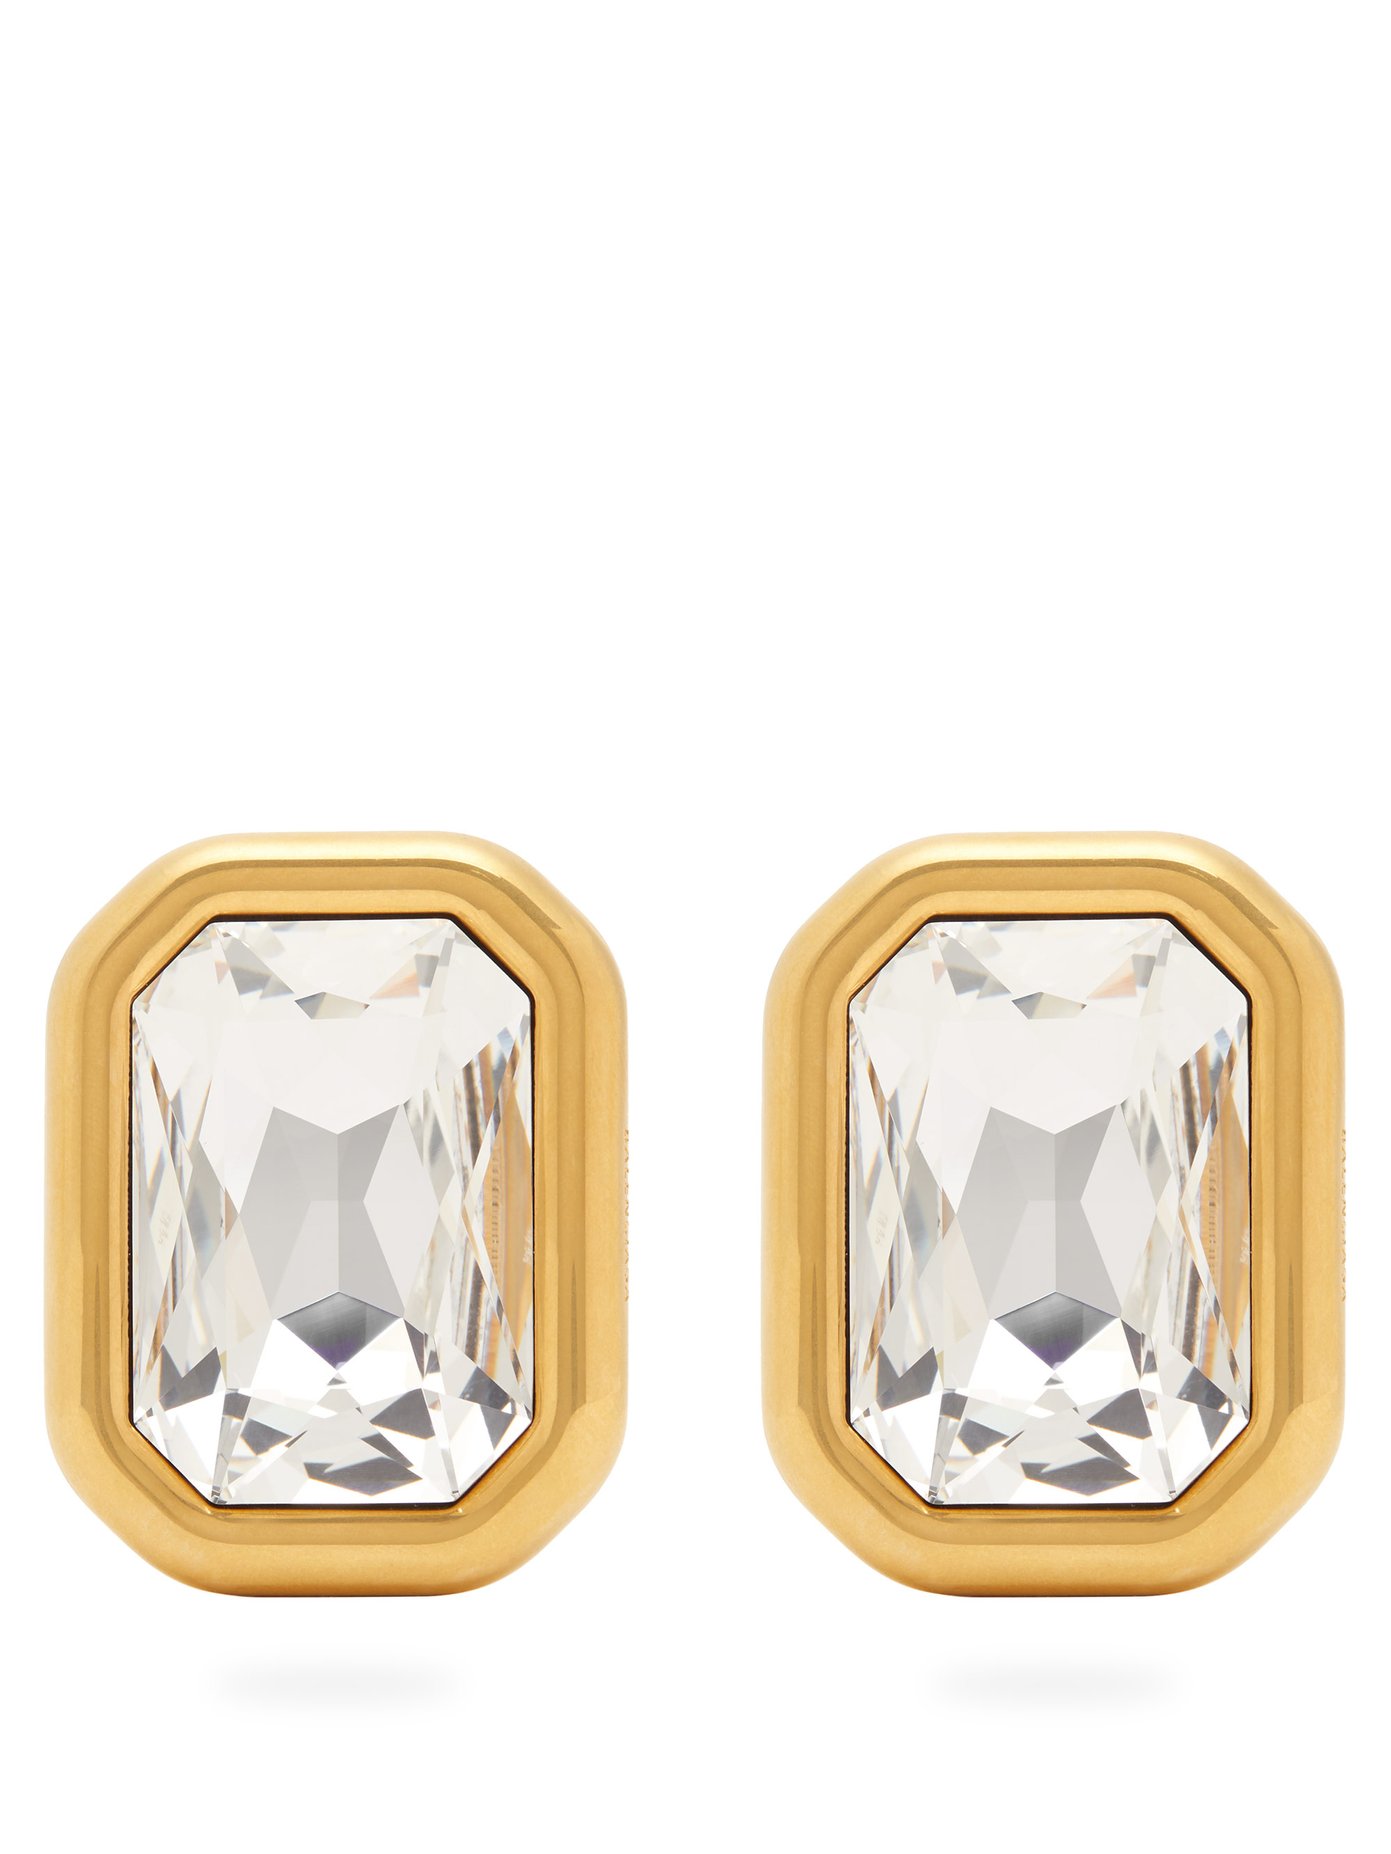 Dallas crystal clip earrings 